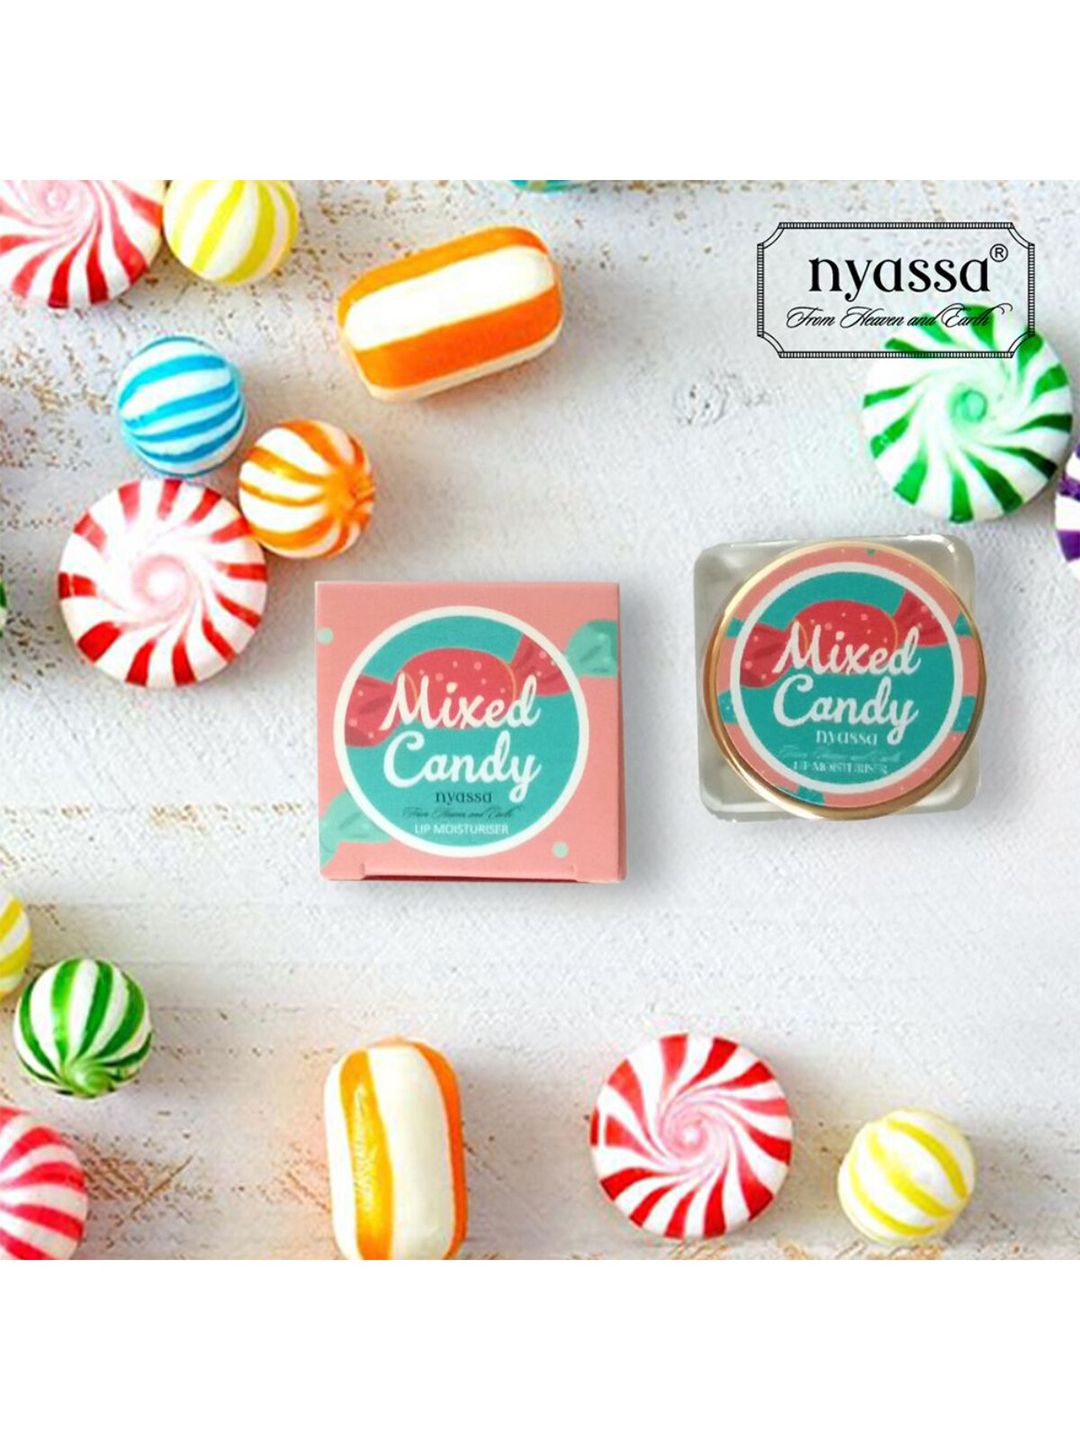 Nyassa Mixed Candy Natural Moisturizing Lip Balm with Sweet Almond Oil & Jojoba Oil - 10g Price in India